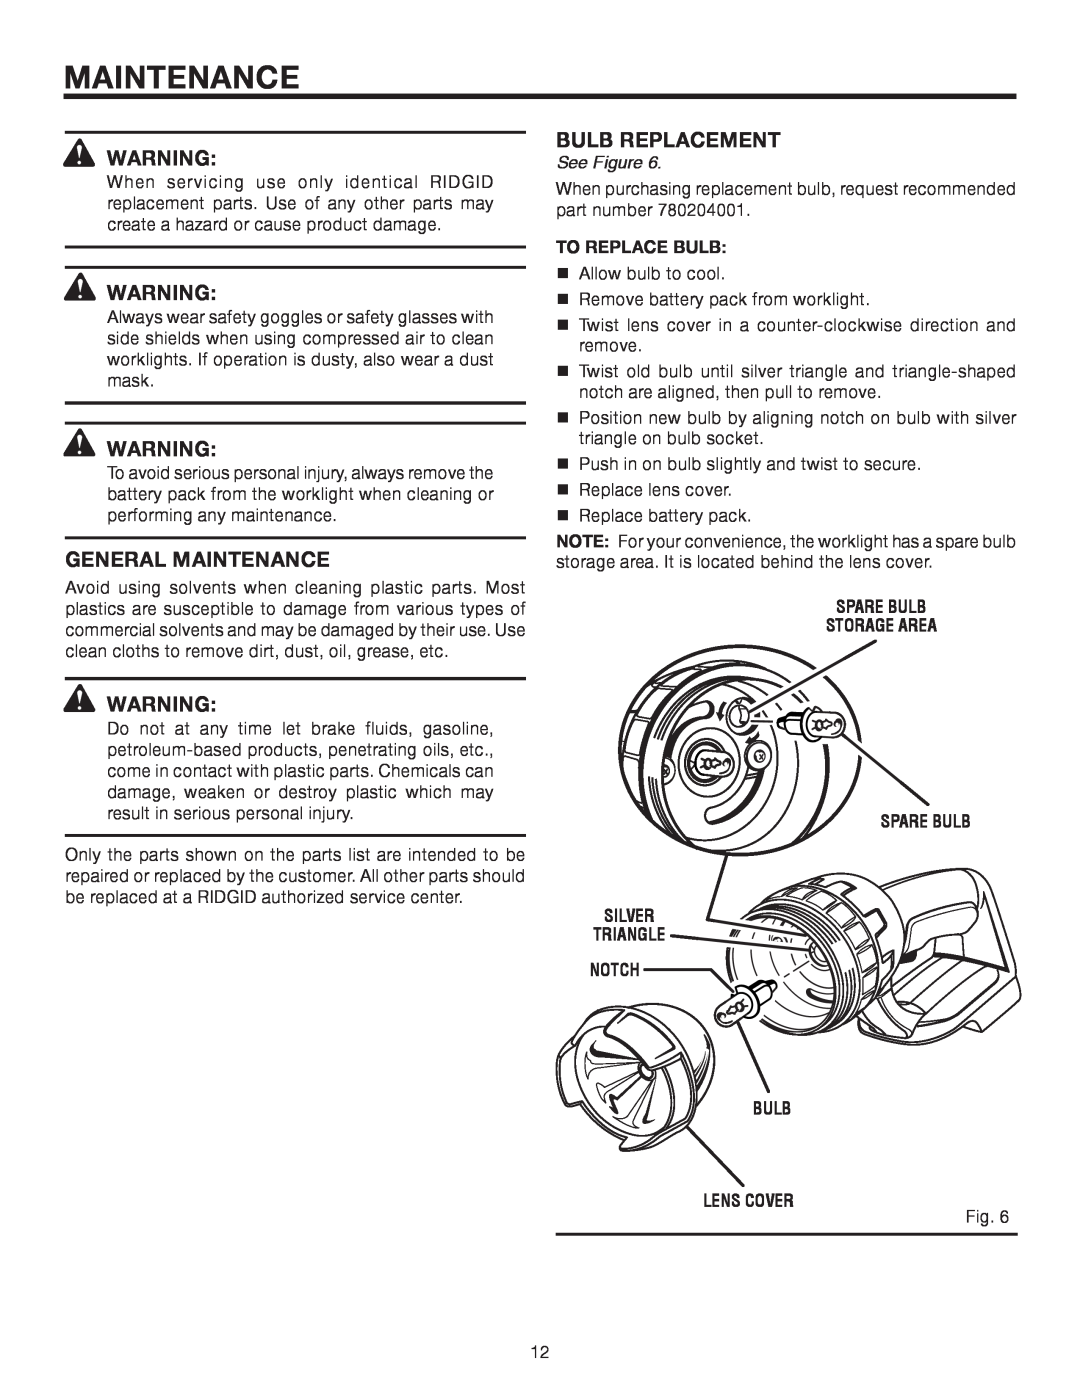 RIDGID R849 manual General Maintenance, Bulb Replacement, See Figure 